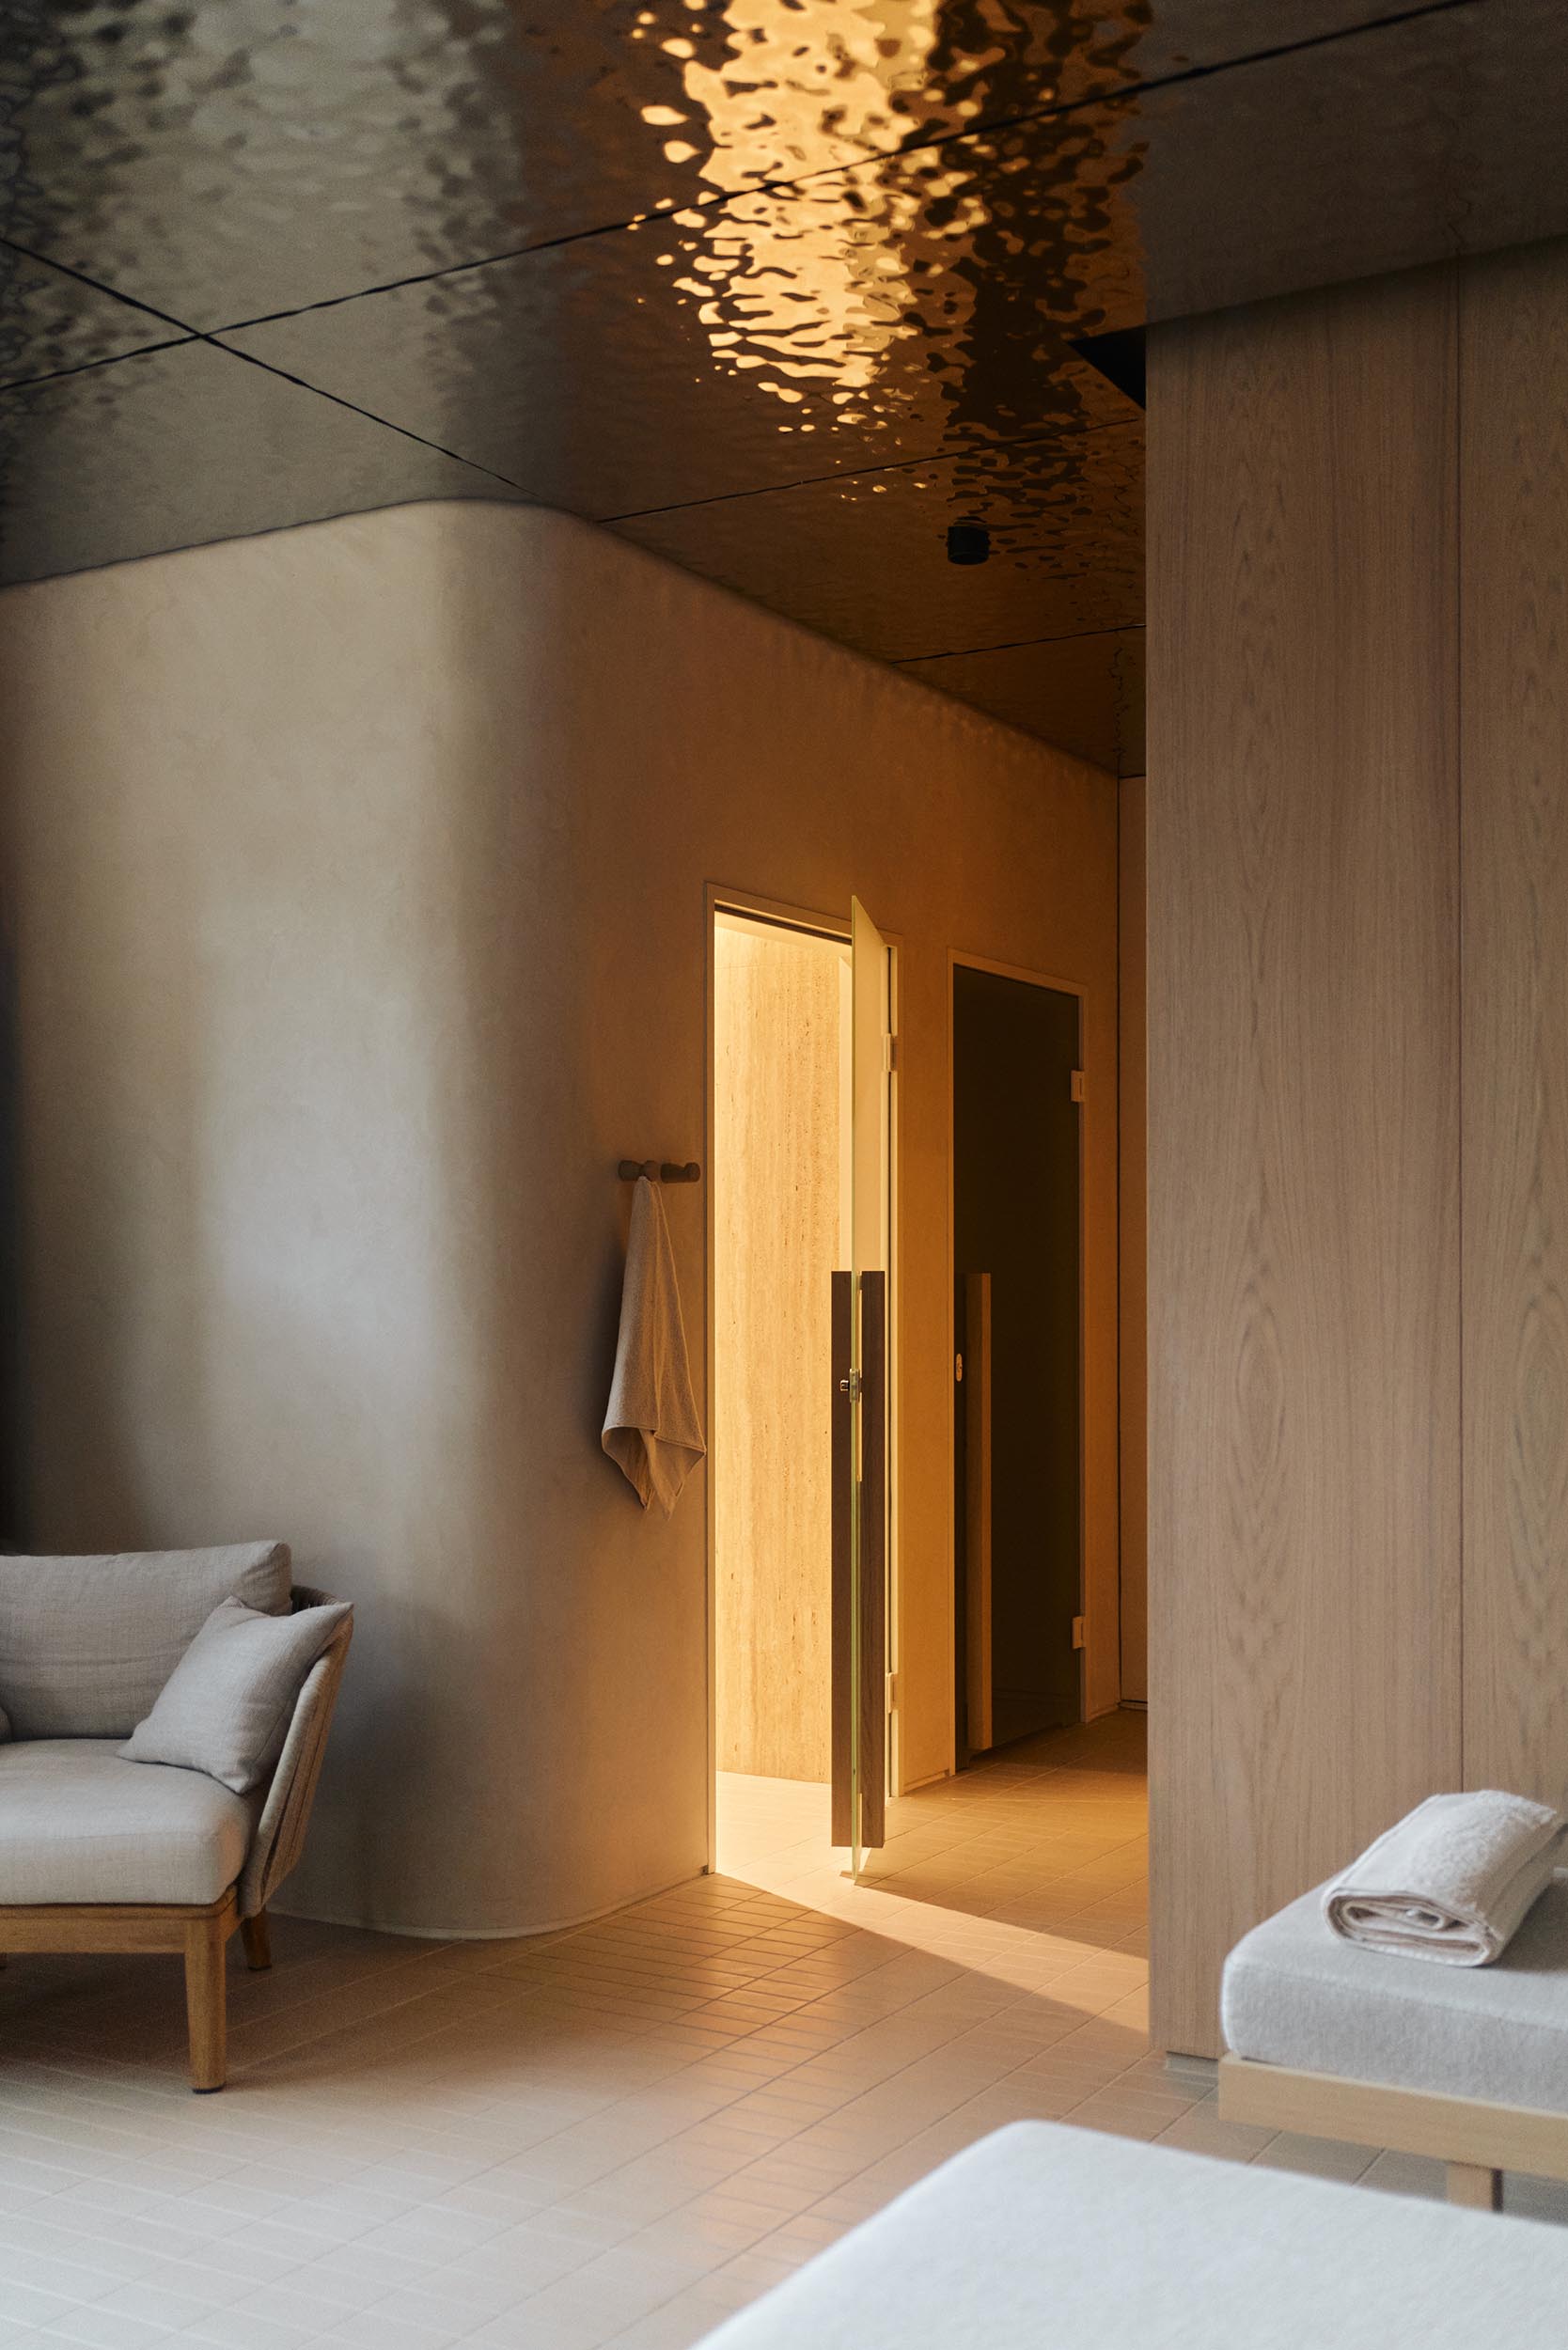 Akurat & PB/Studio,荷兰,微水泥,极简主义,酒店公寓设计案例,原木色,海滨酒店公寓